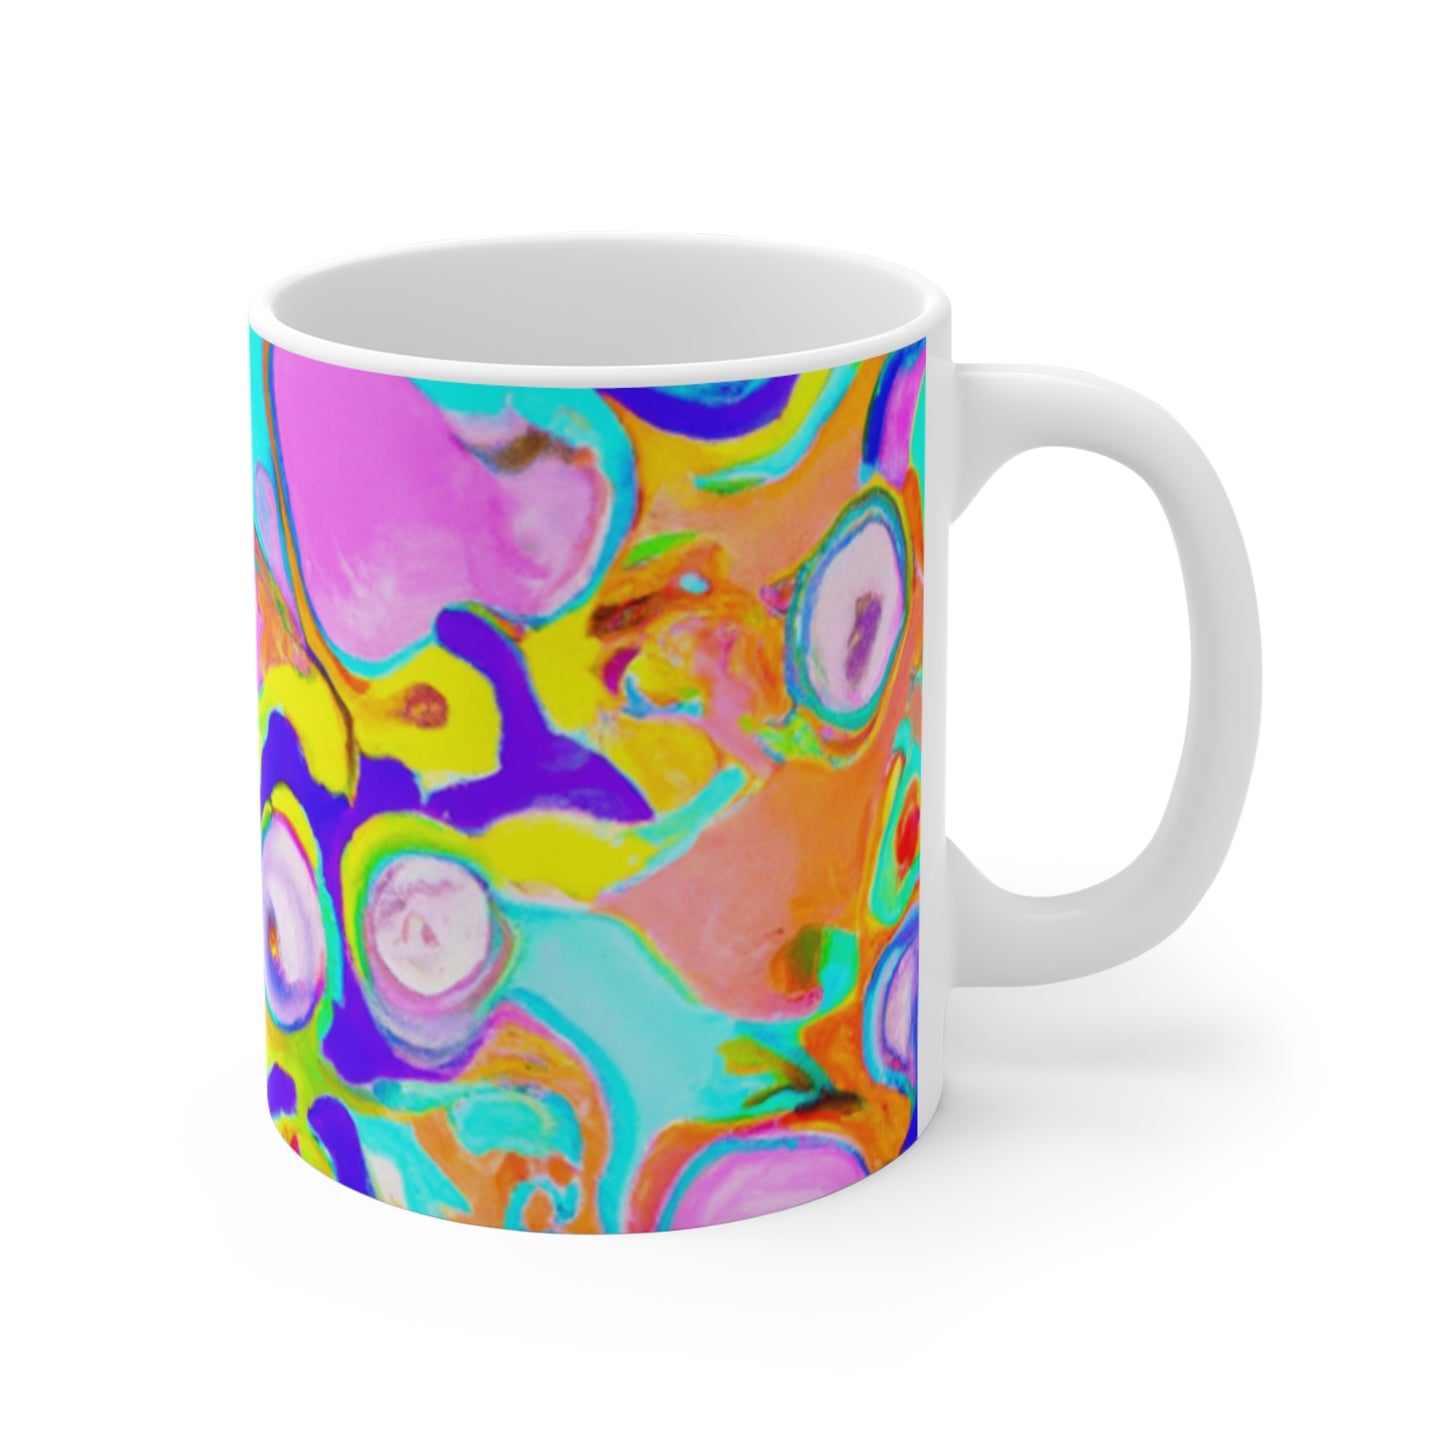 Samantha's Supreme Roast - Psychedelic Coffee Cup Mug 11 Ounce